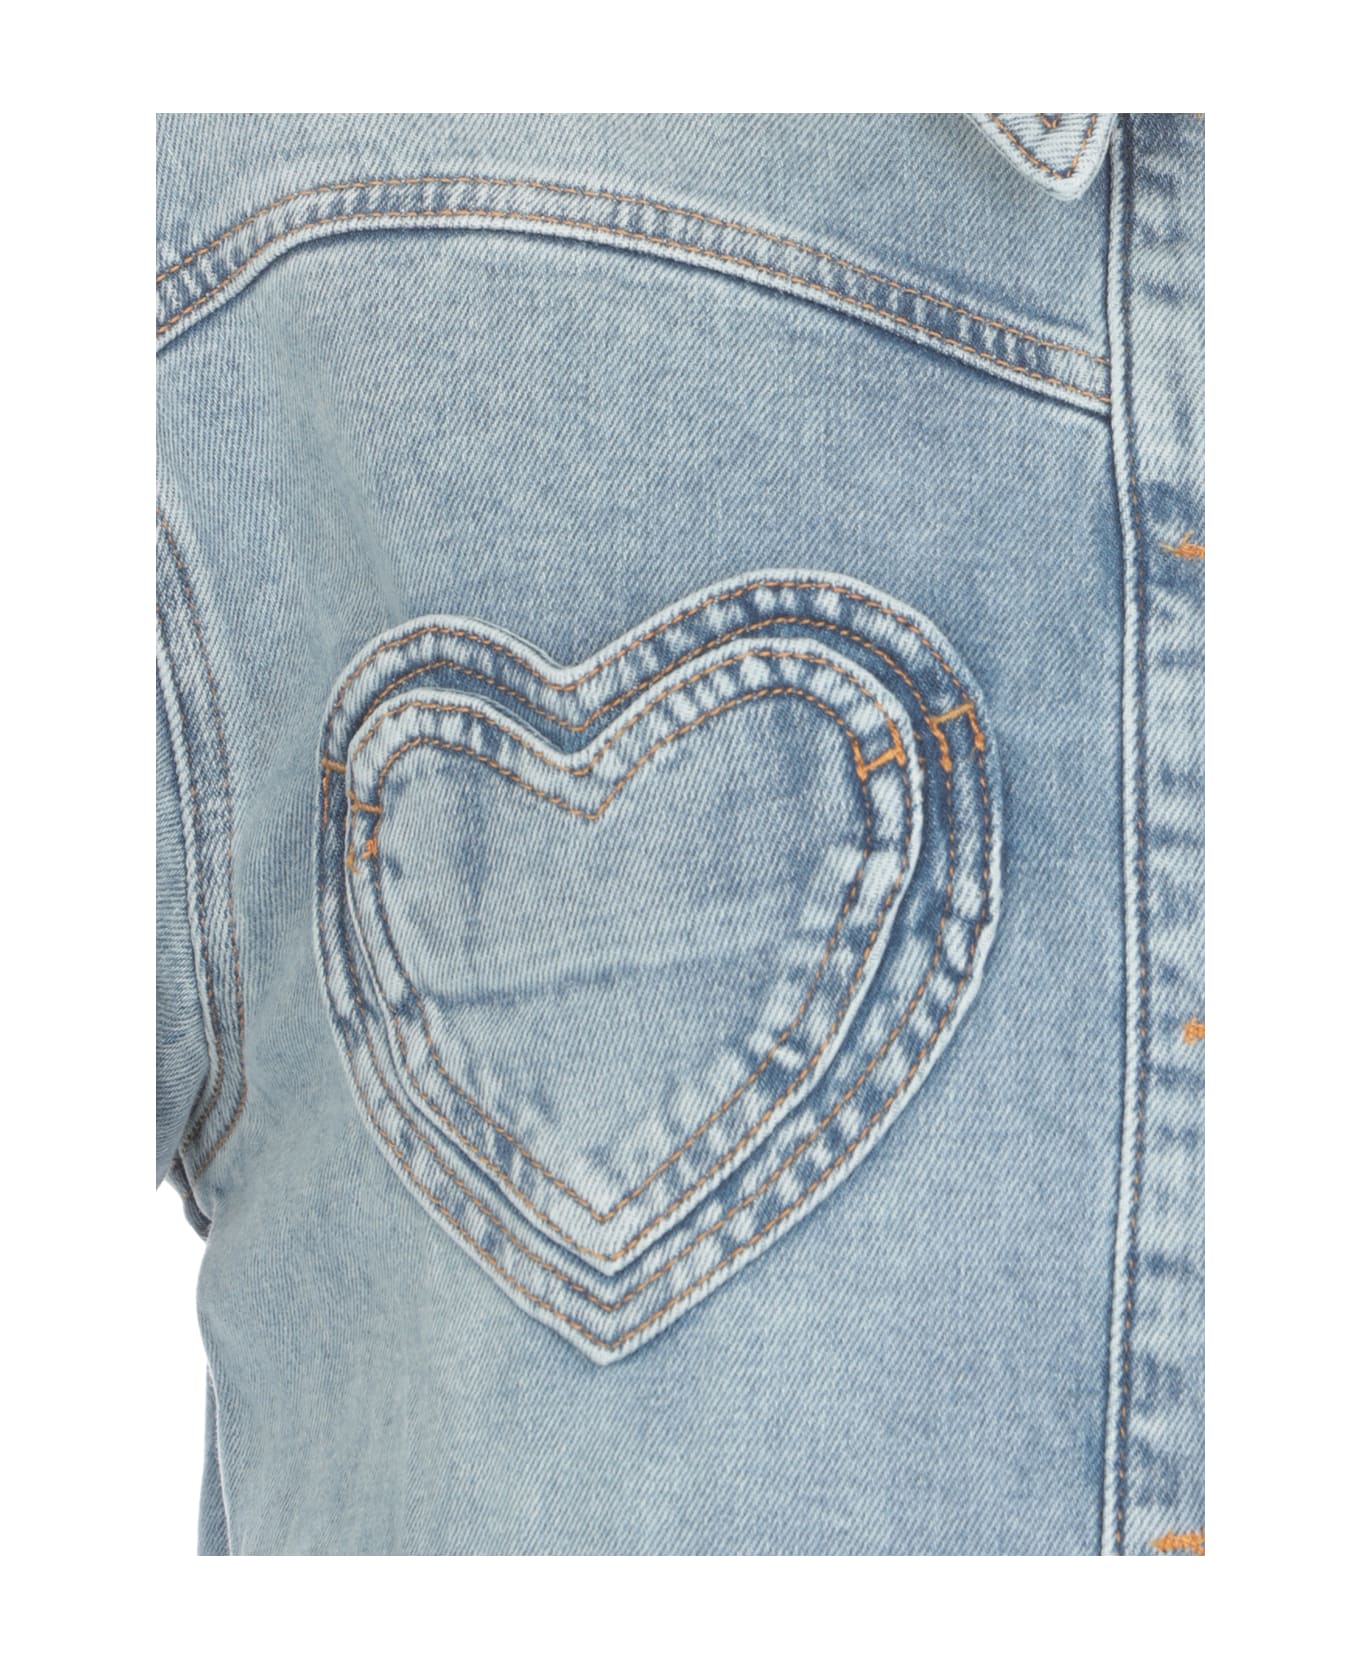 M05CH1N0 Jeans Heart Pockets Denim Jacket - Denim ジャケット